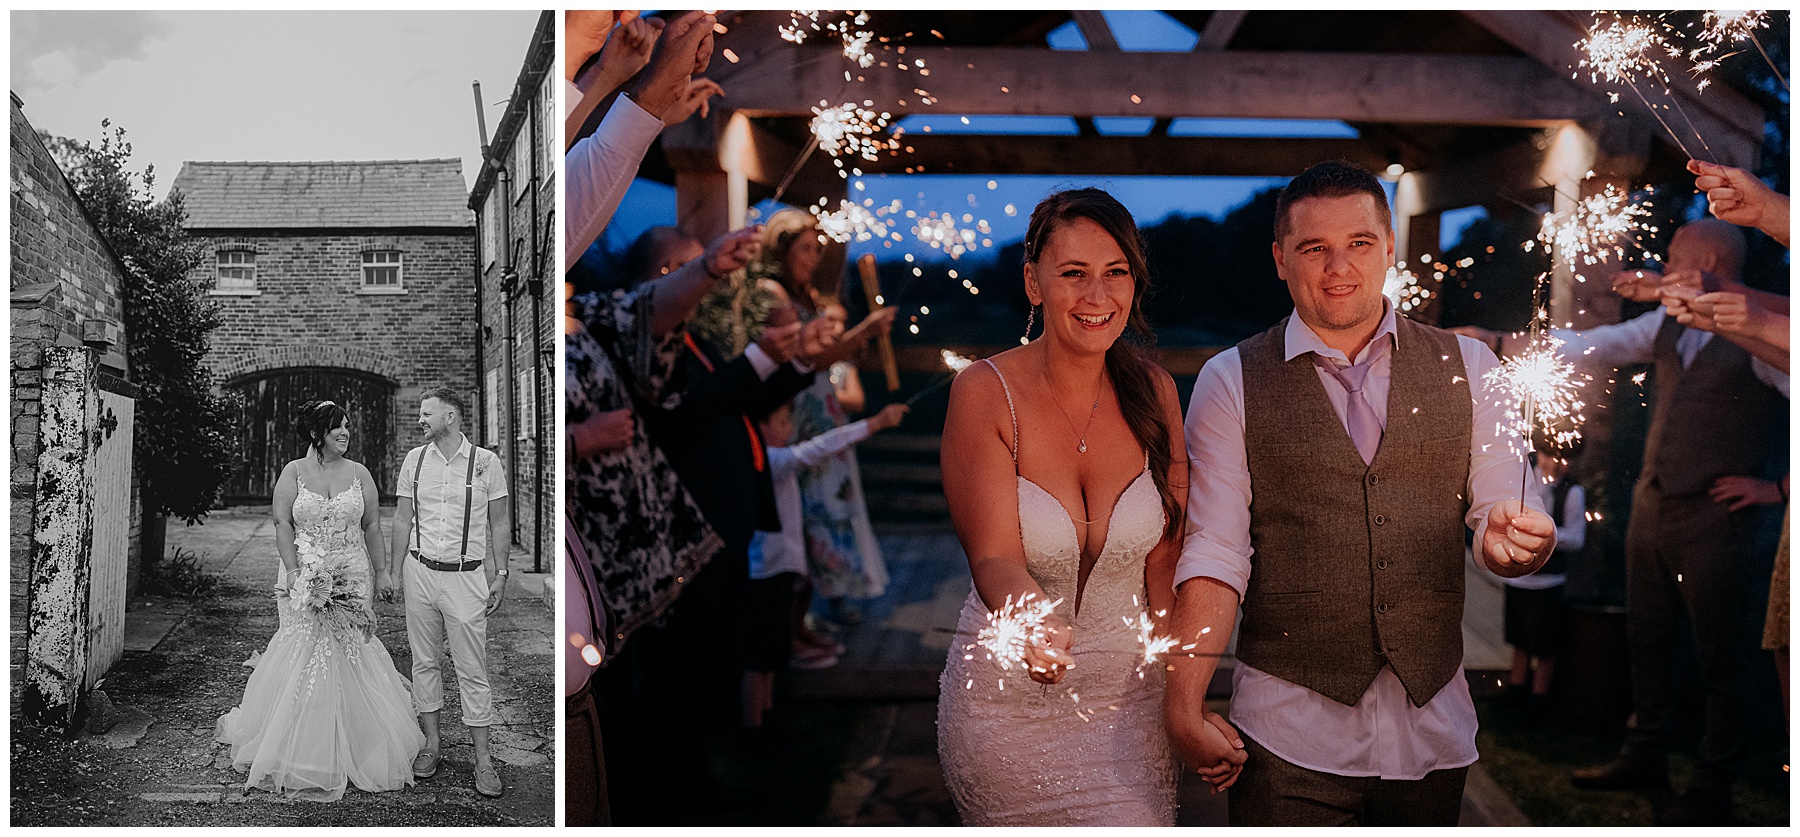 Creative Wedding Photography - Wedding Sparklers